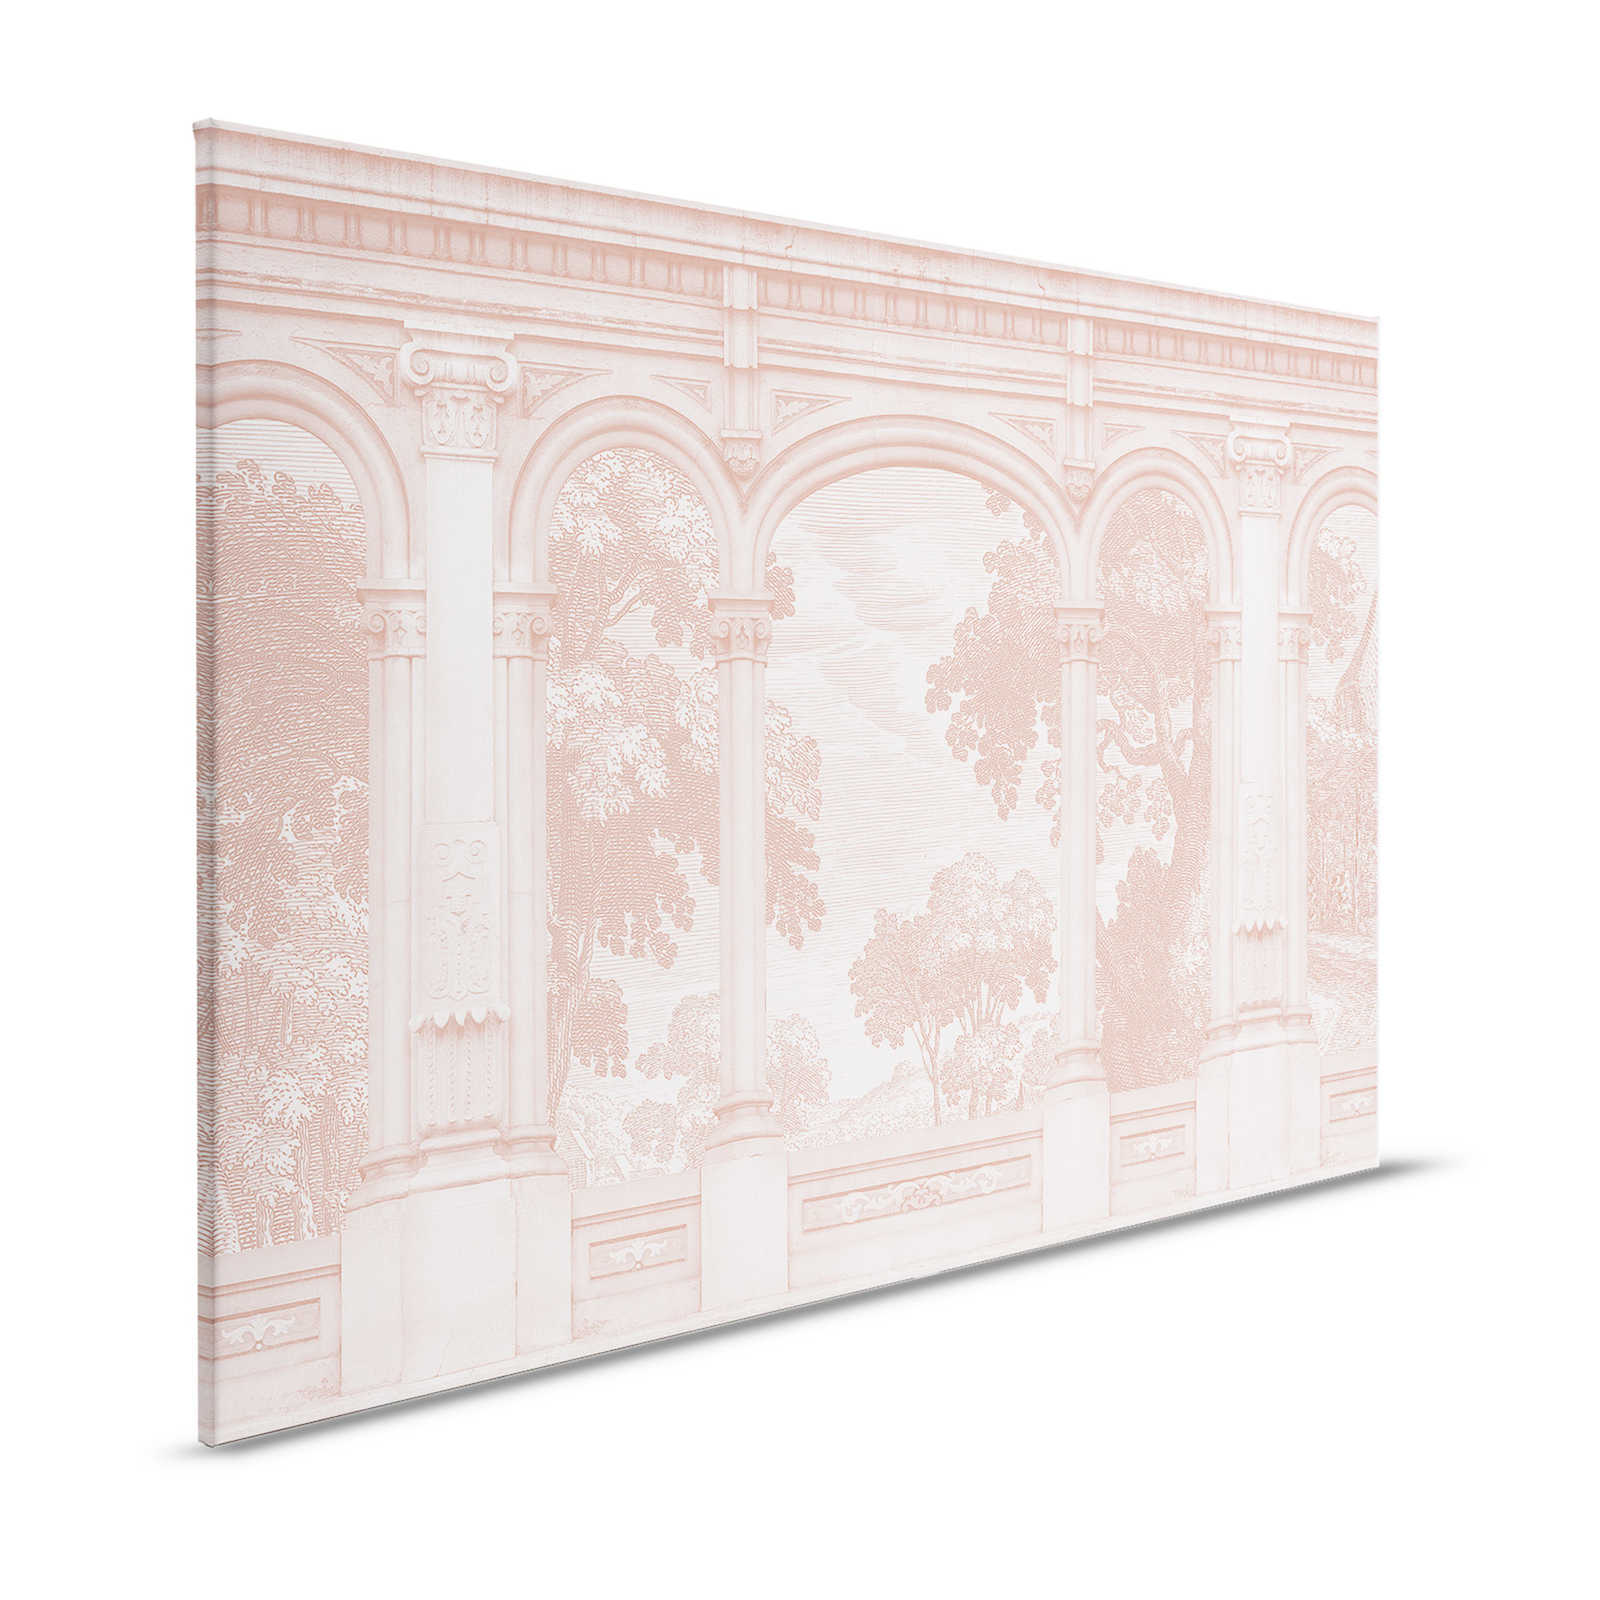 Roma 3 - Lienzo rosa Diseño histórico con ventana de arco redondo - 1,20 m x 0,80 m
